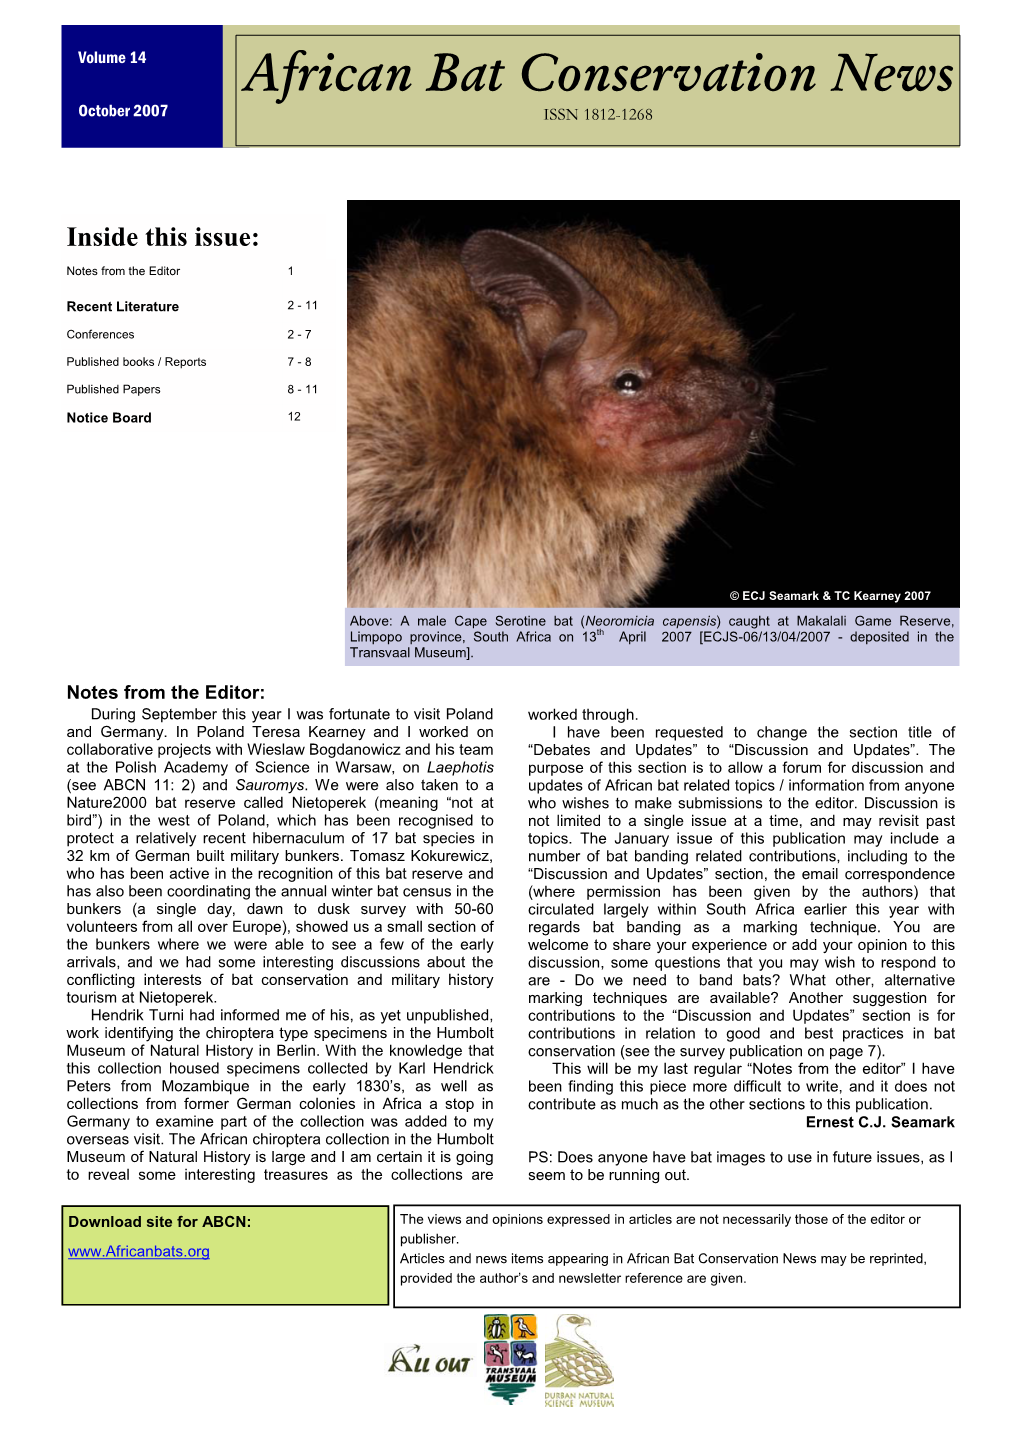 African Bat Conservation News October 2007 ISSN 1812-1268